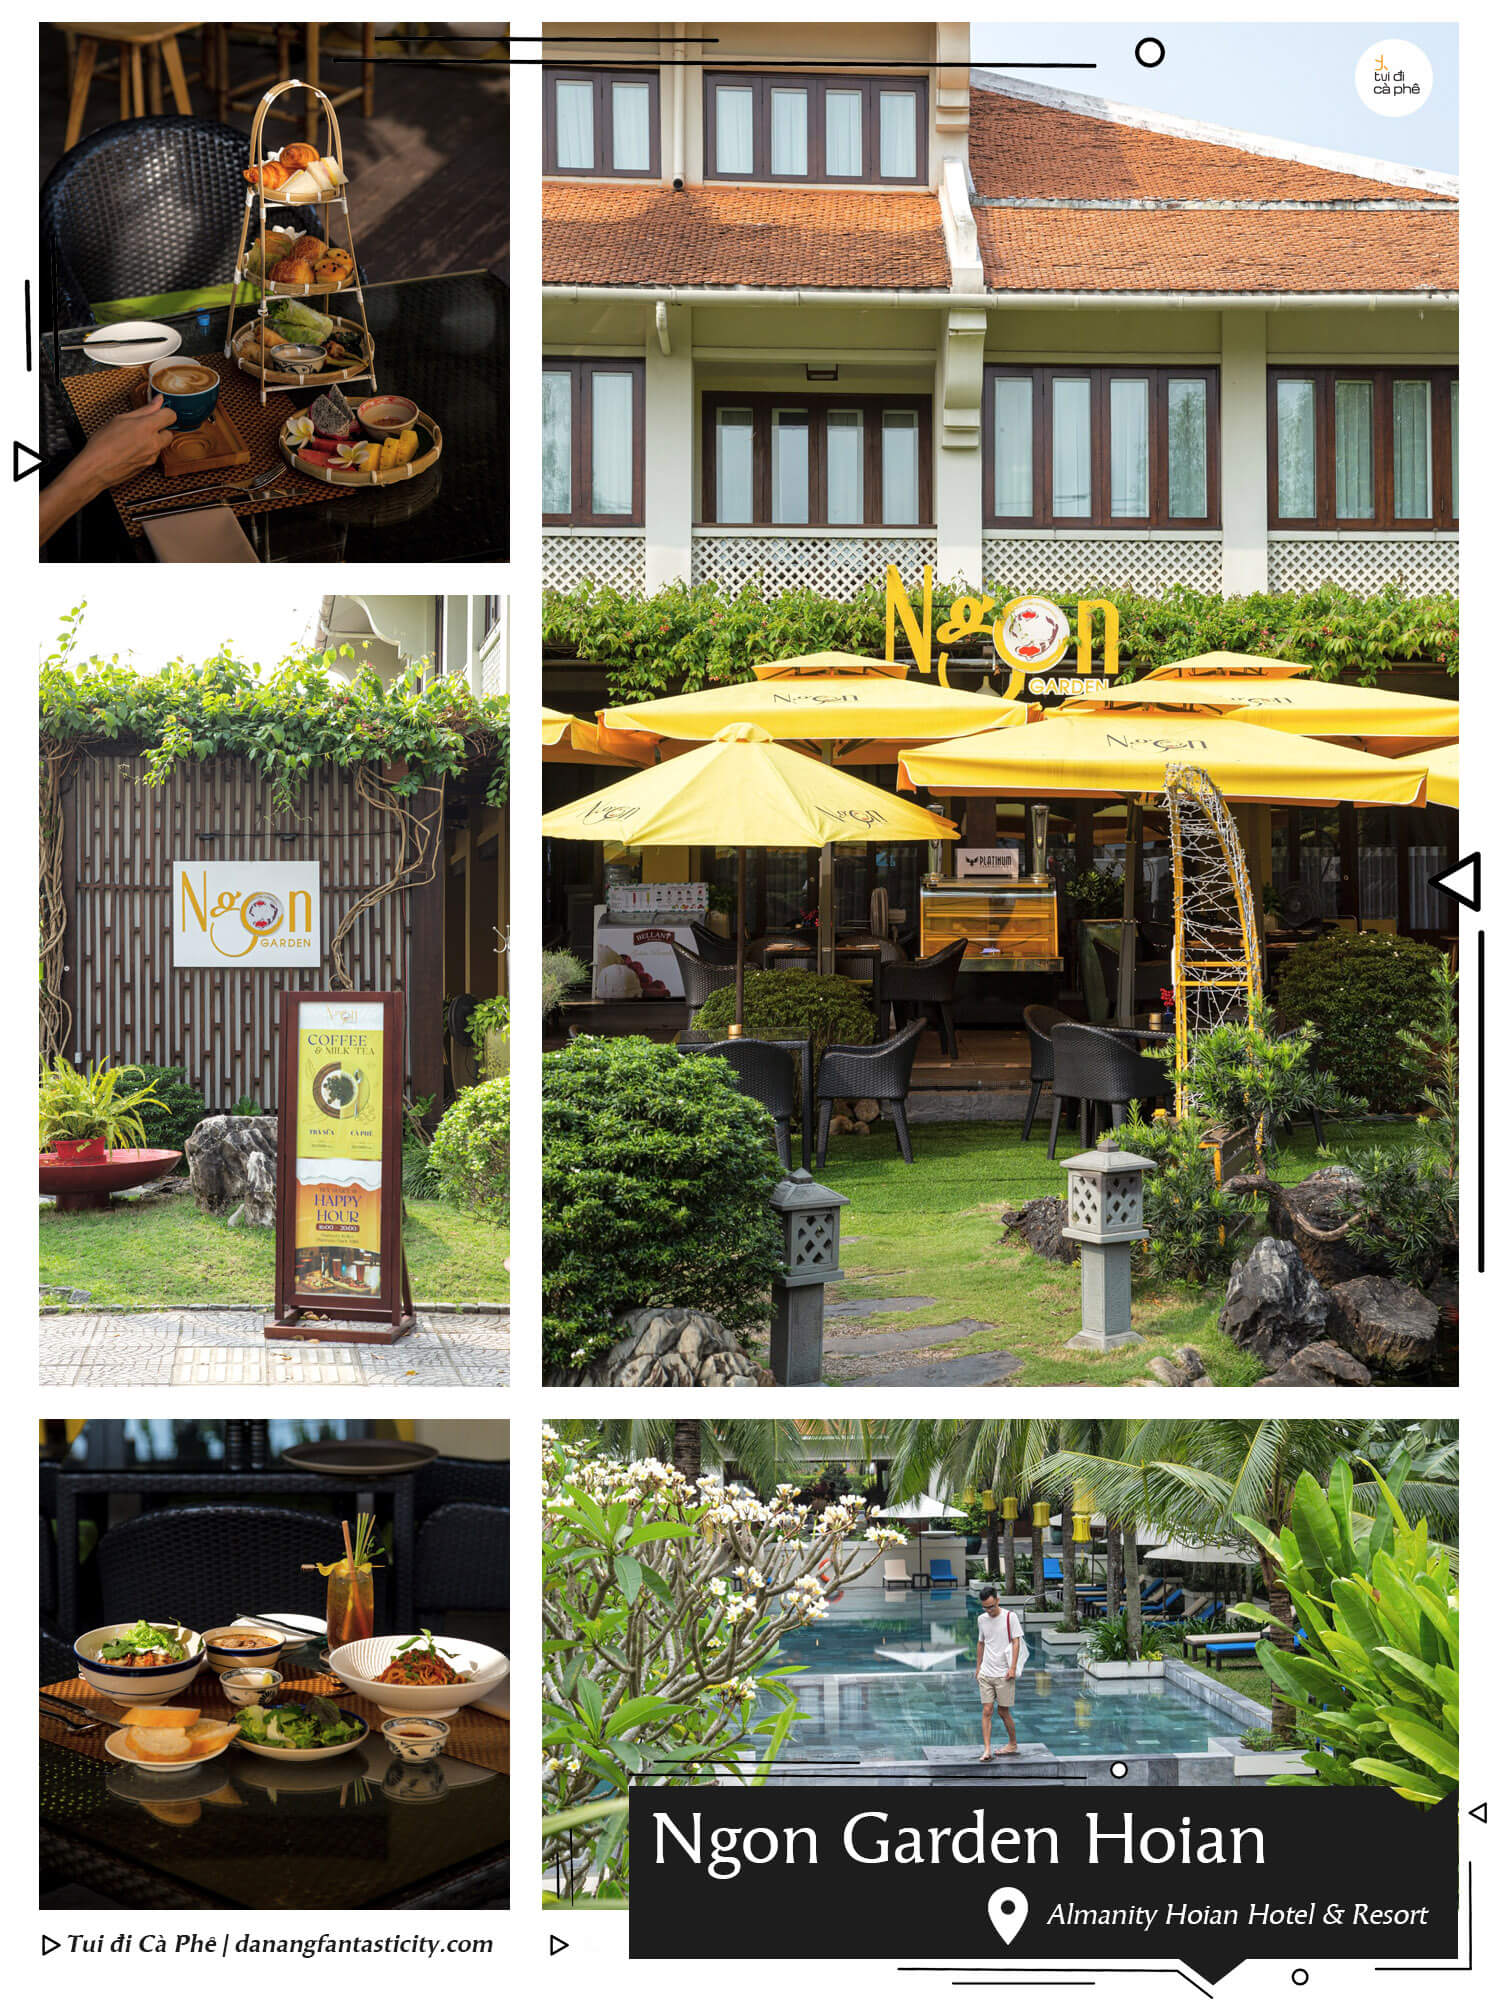 Ngon Garden Hoian Almanity Hoian Hotel Resort Tui Di Ca Phe